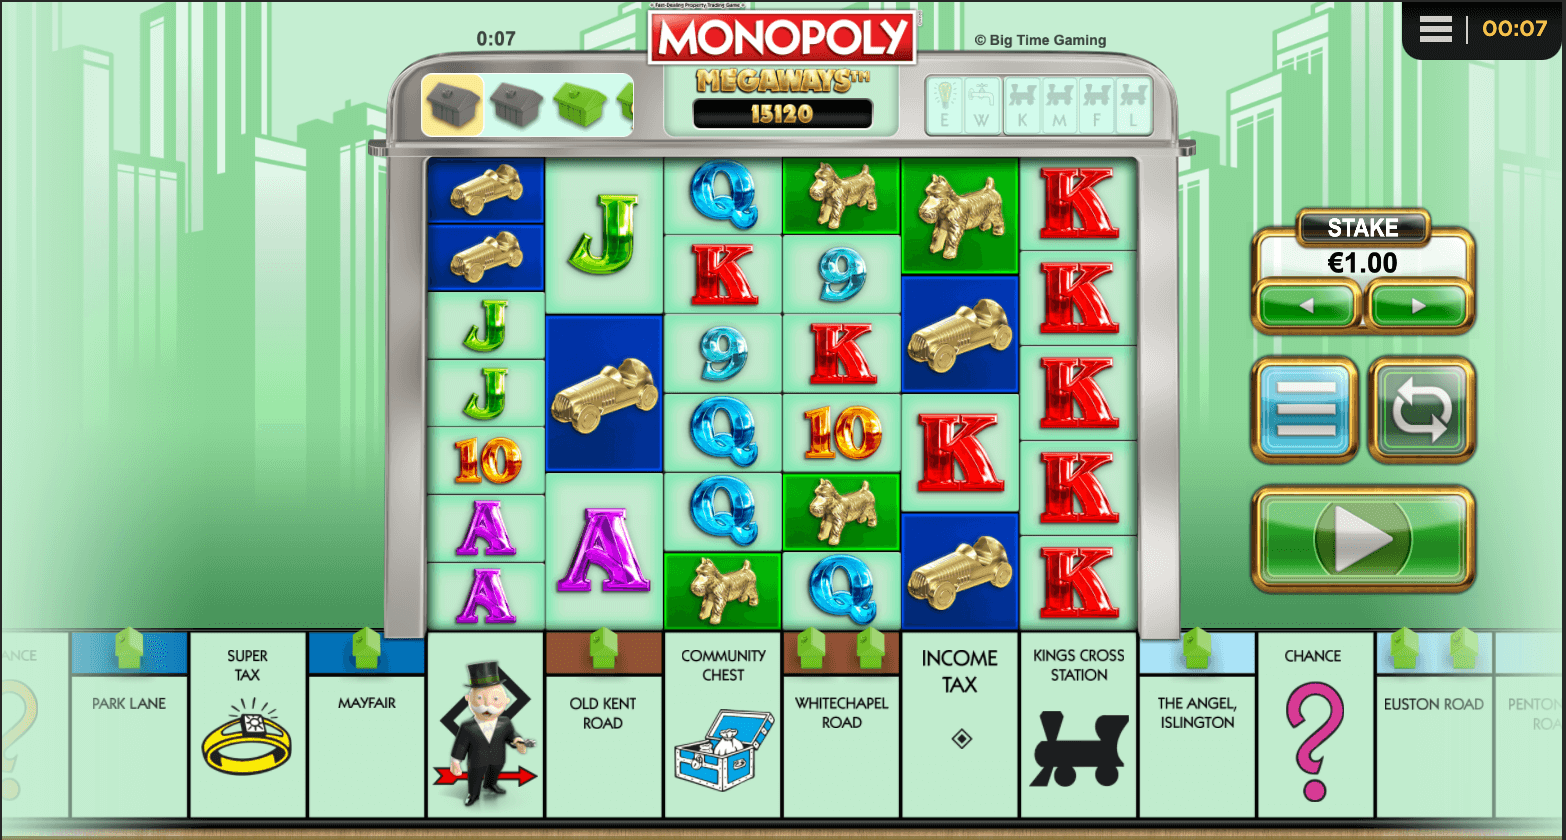 Monopoly Megaways Spel proces